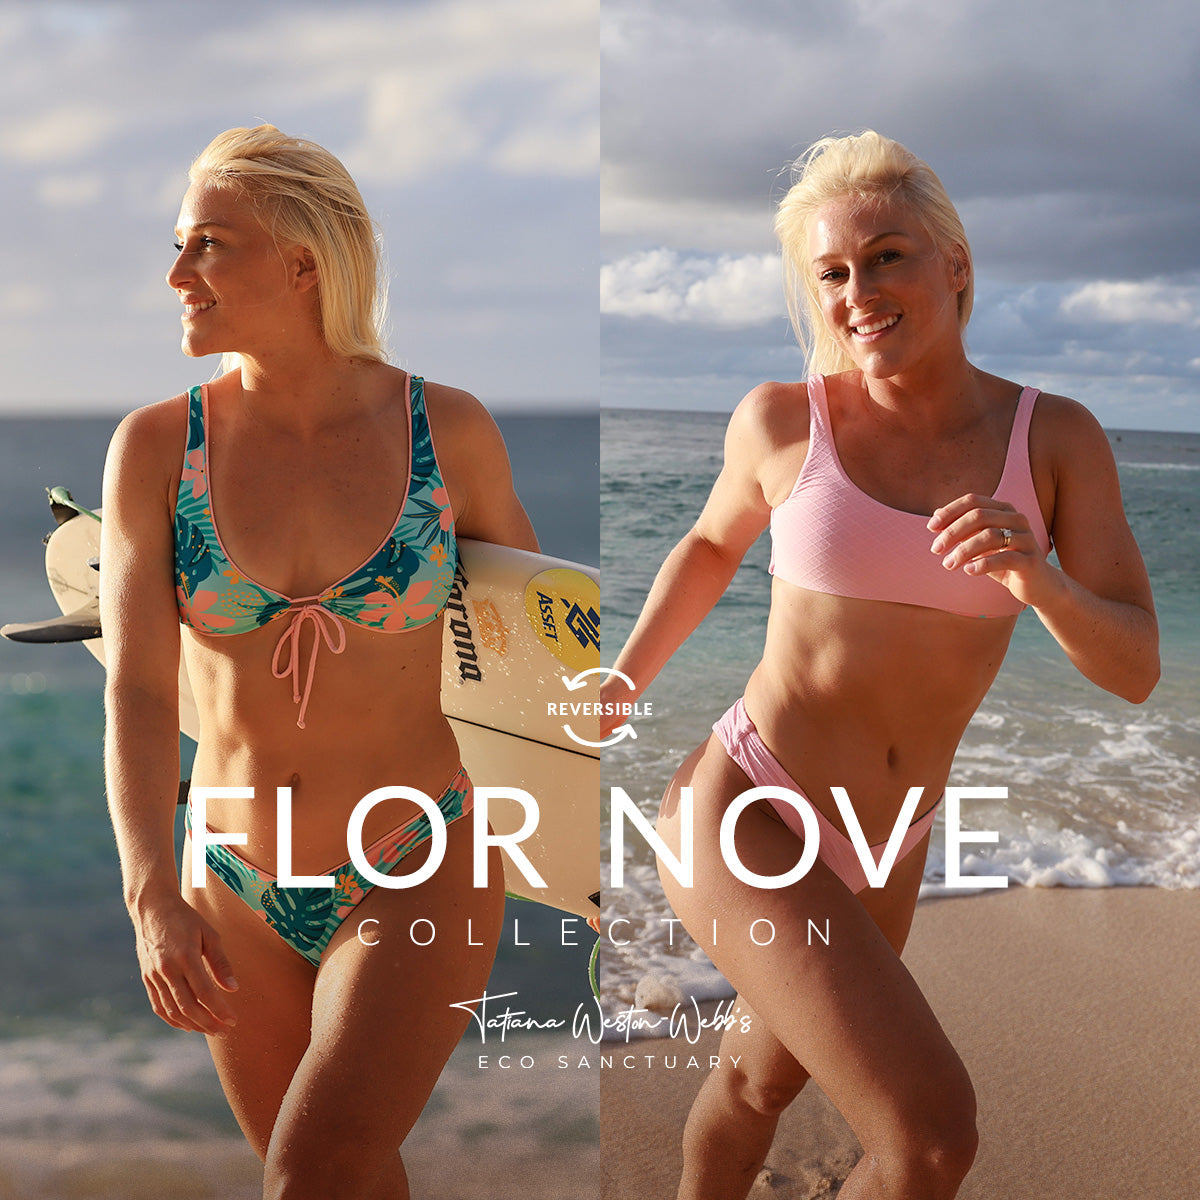 Women's Swimwear: Reversible Flor Nove Collection